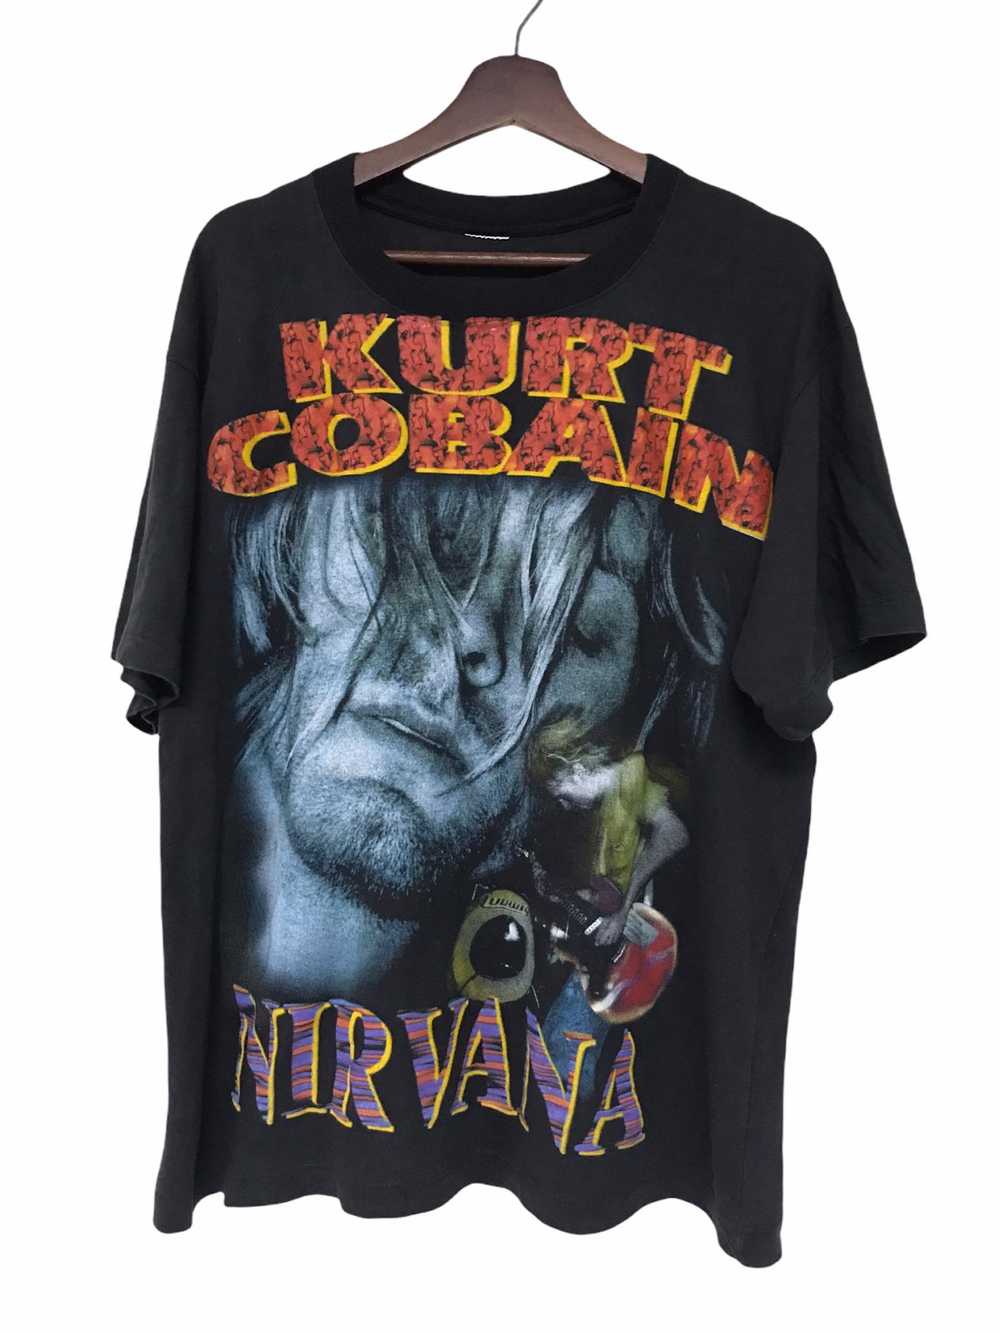 Vintage Nirvana Kurt Cobain bootleg 90s t shirt - image 1